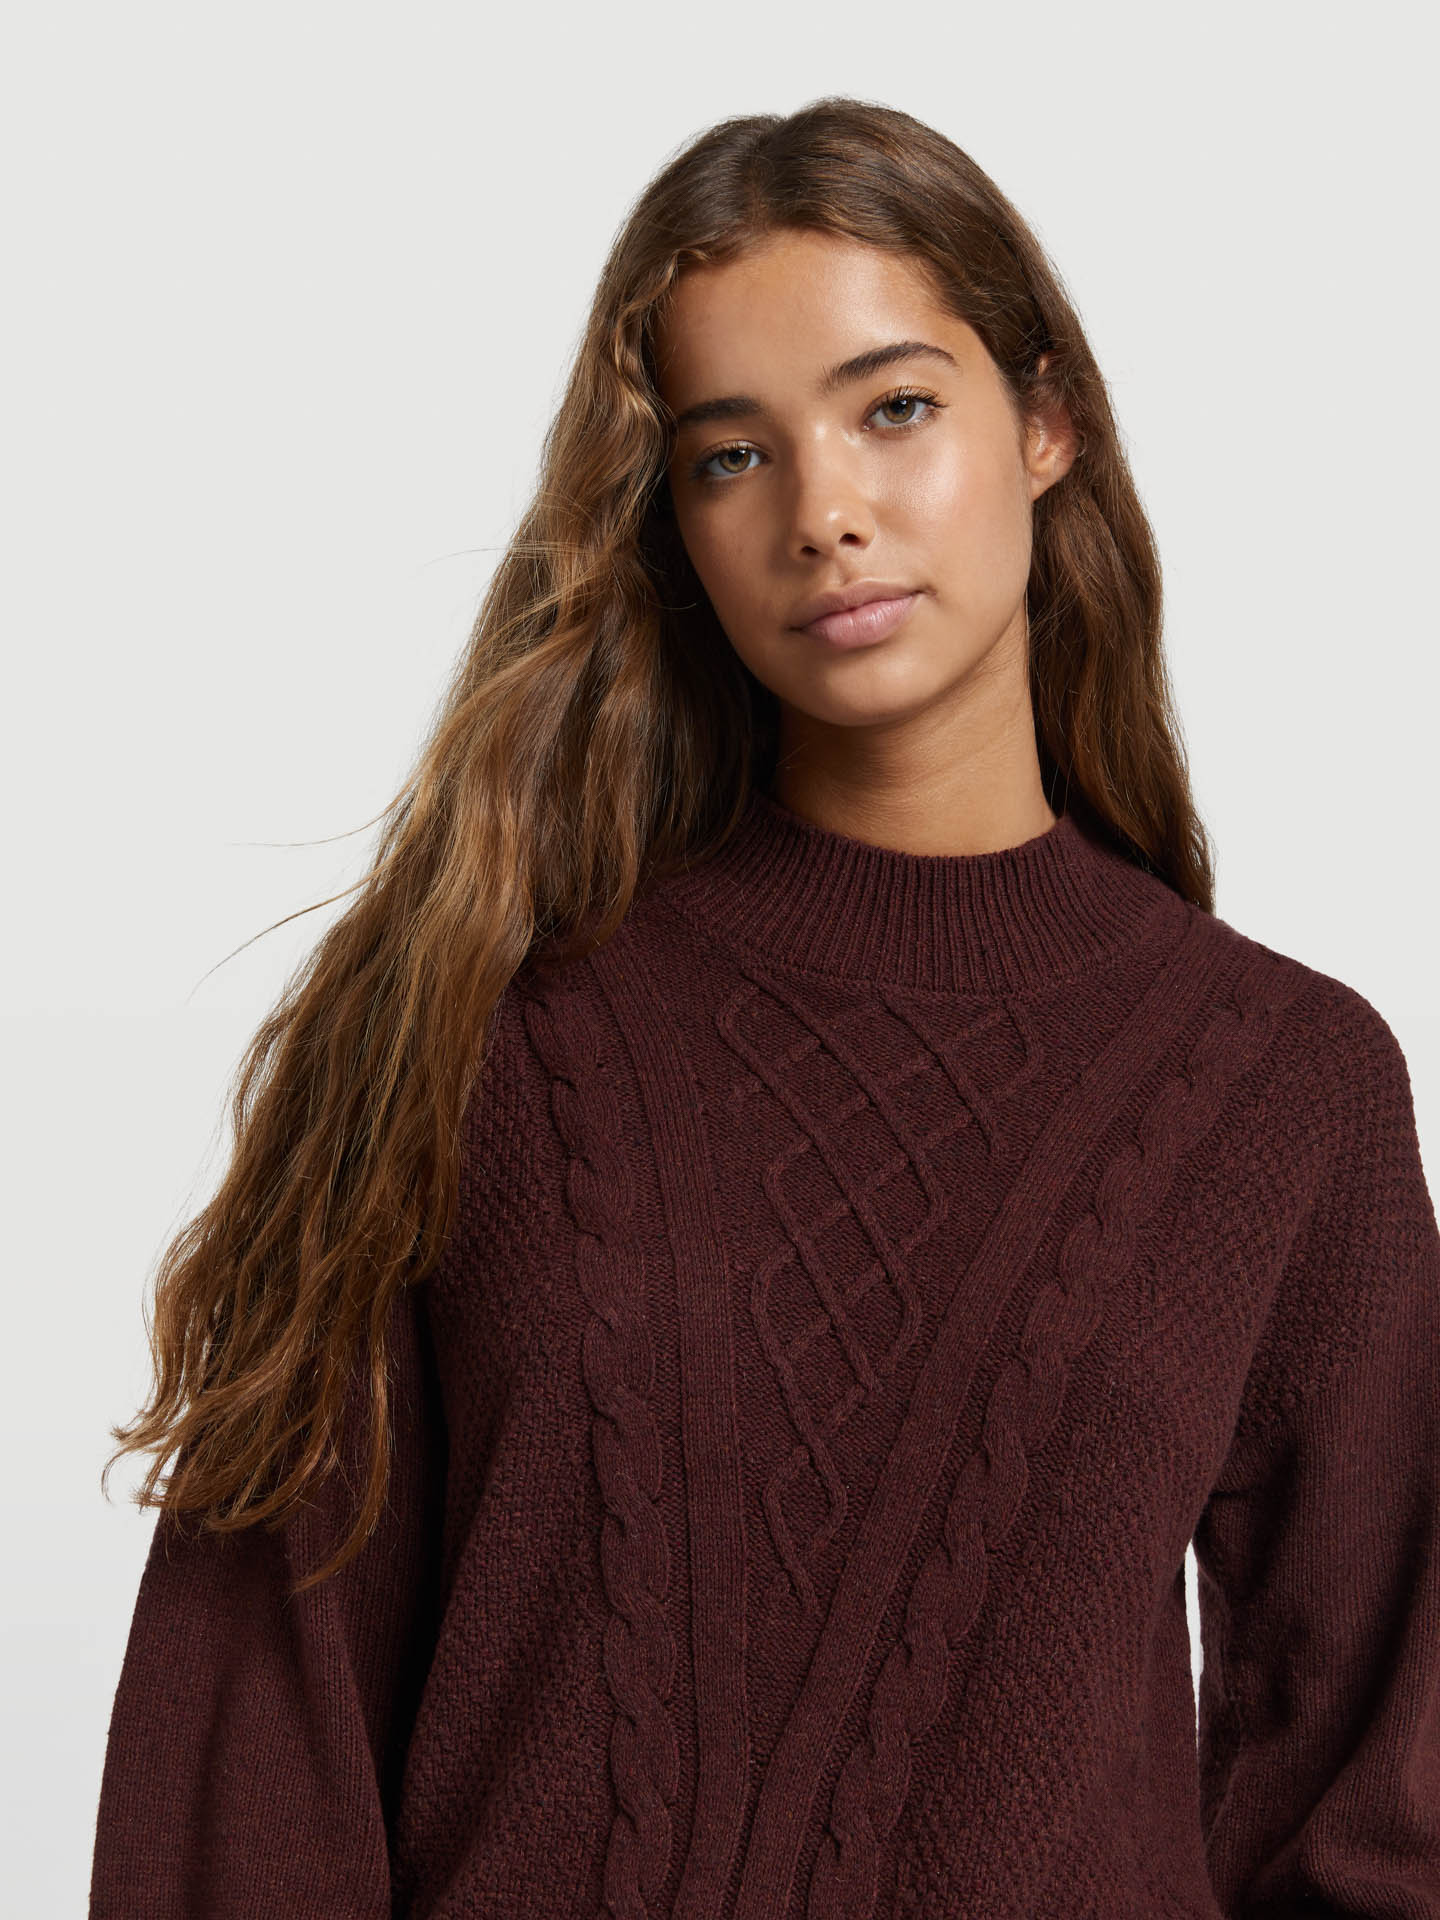 Sweater Brown Casual Woman